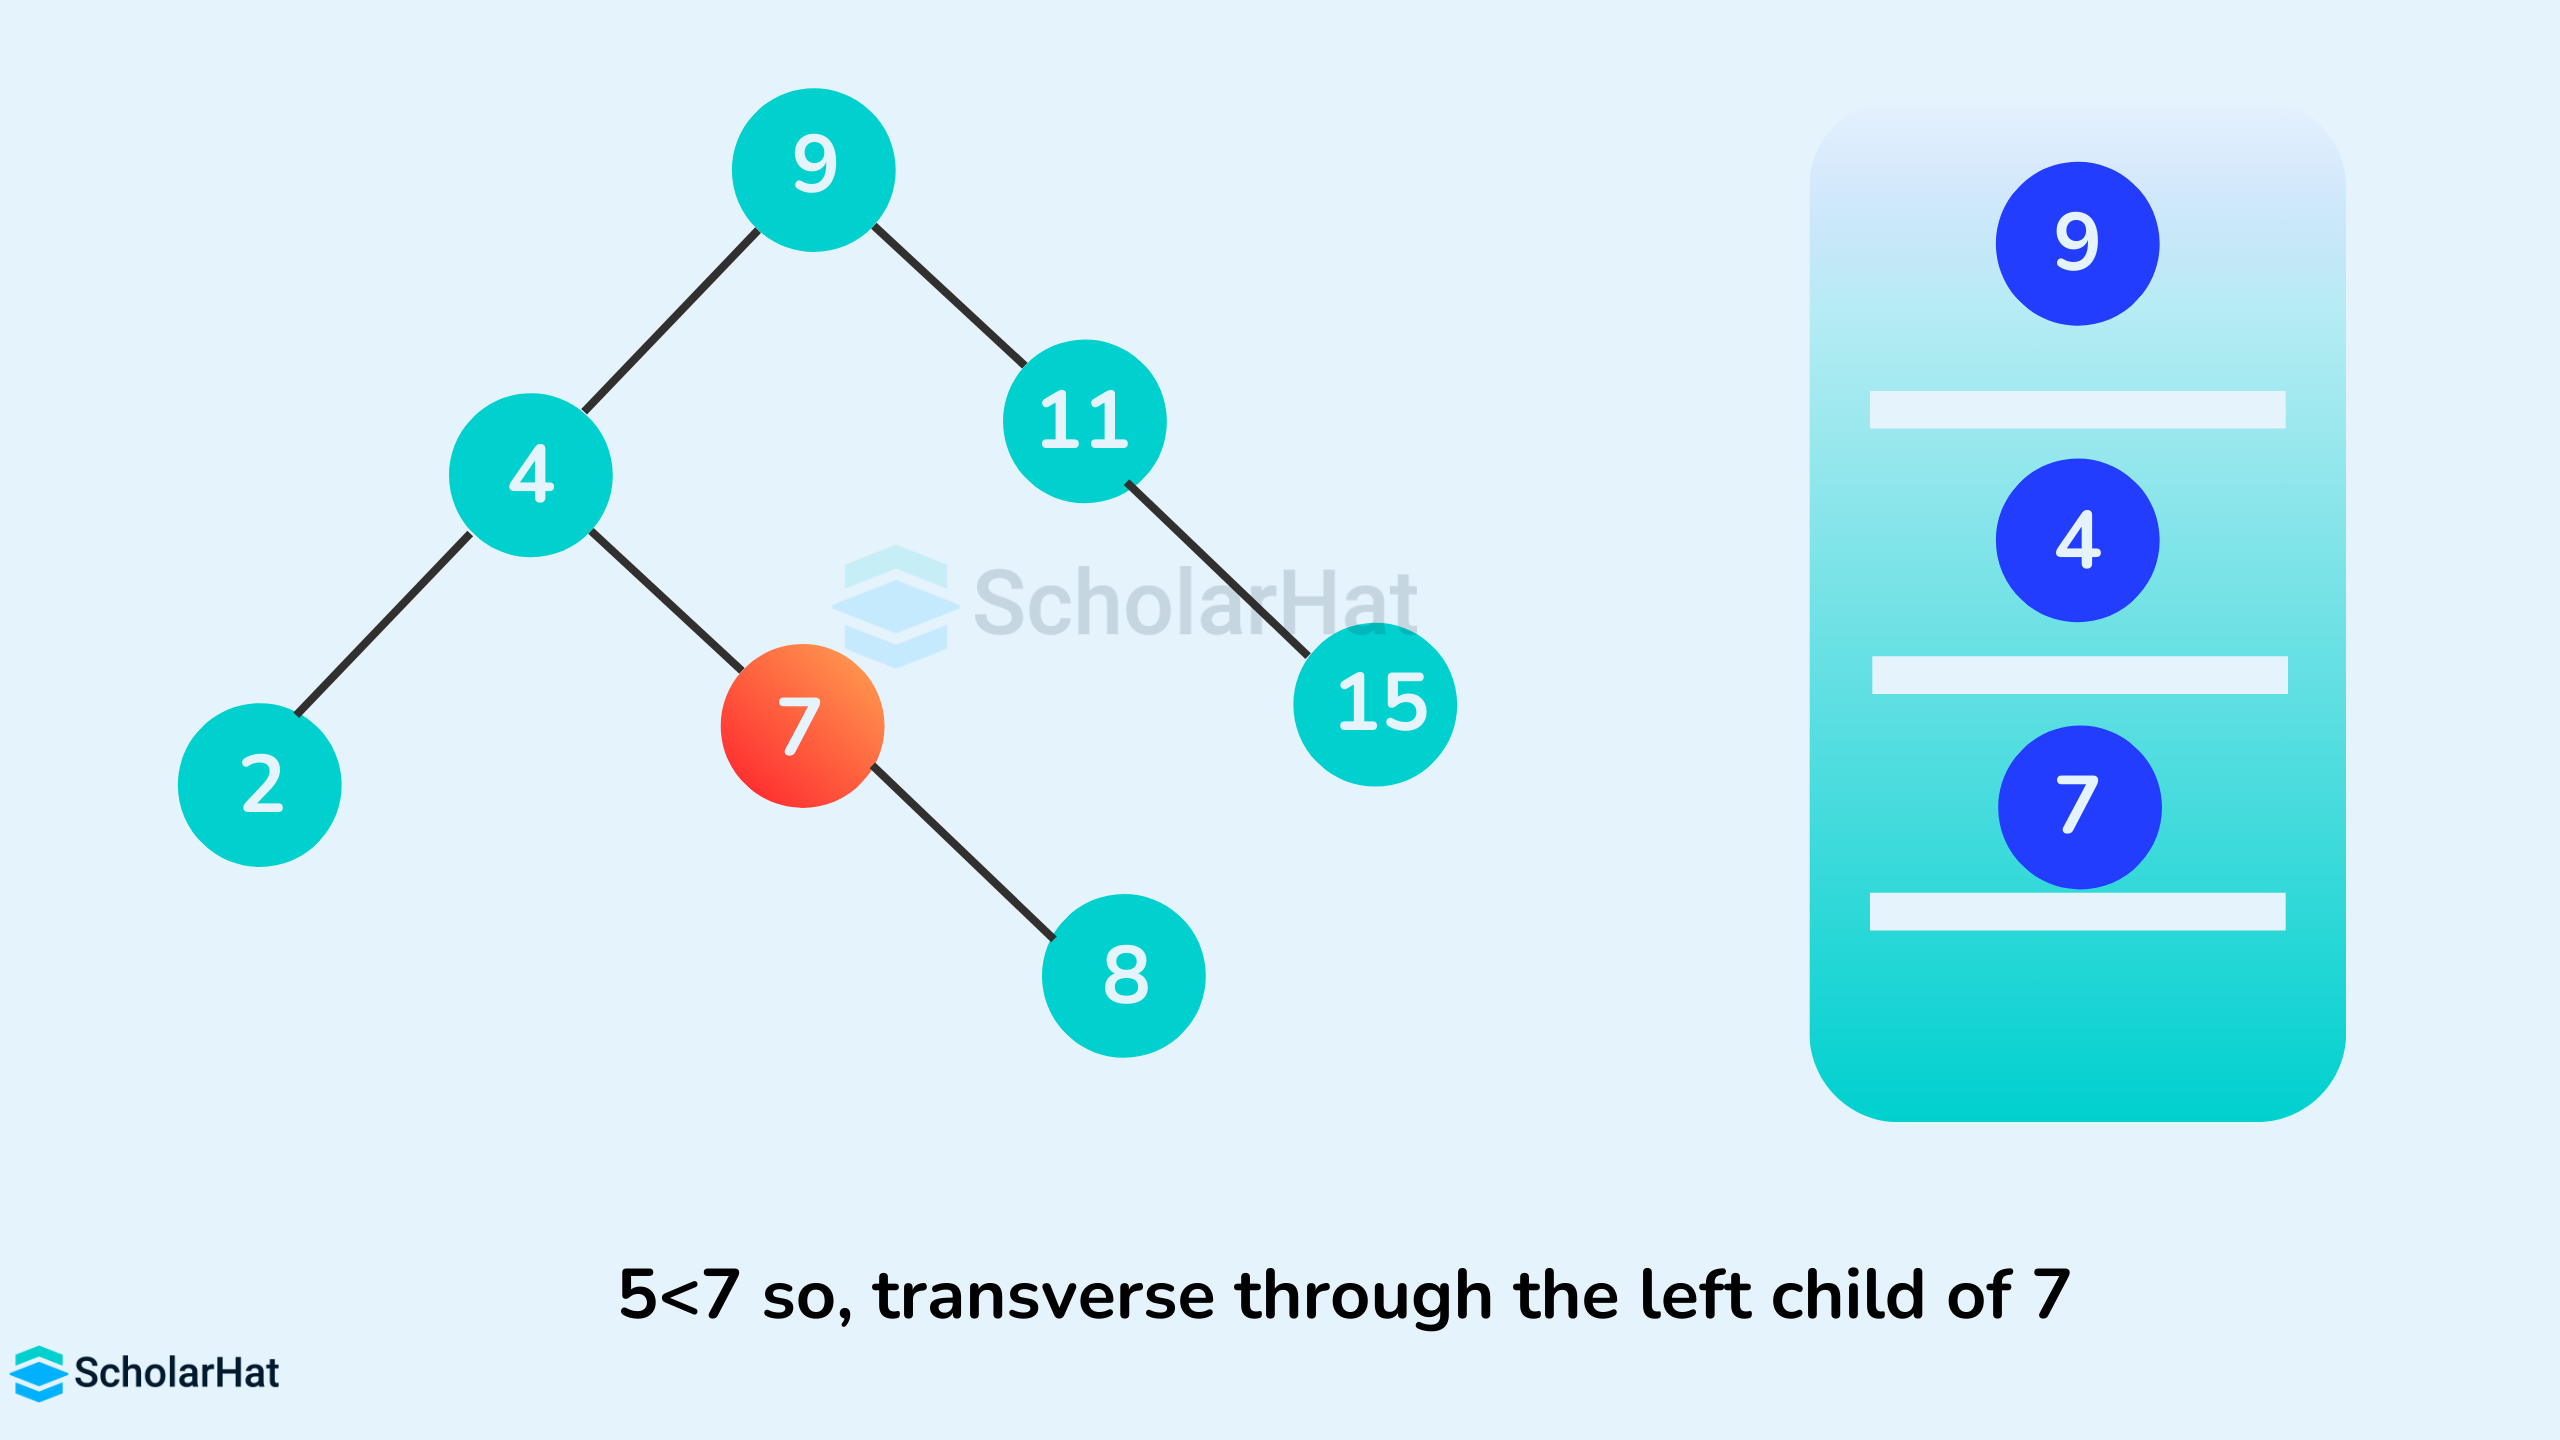 5<7 so, transverse through the left child of 7